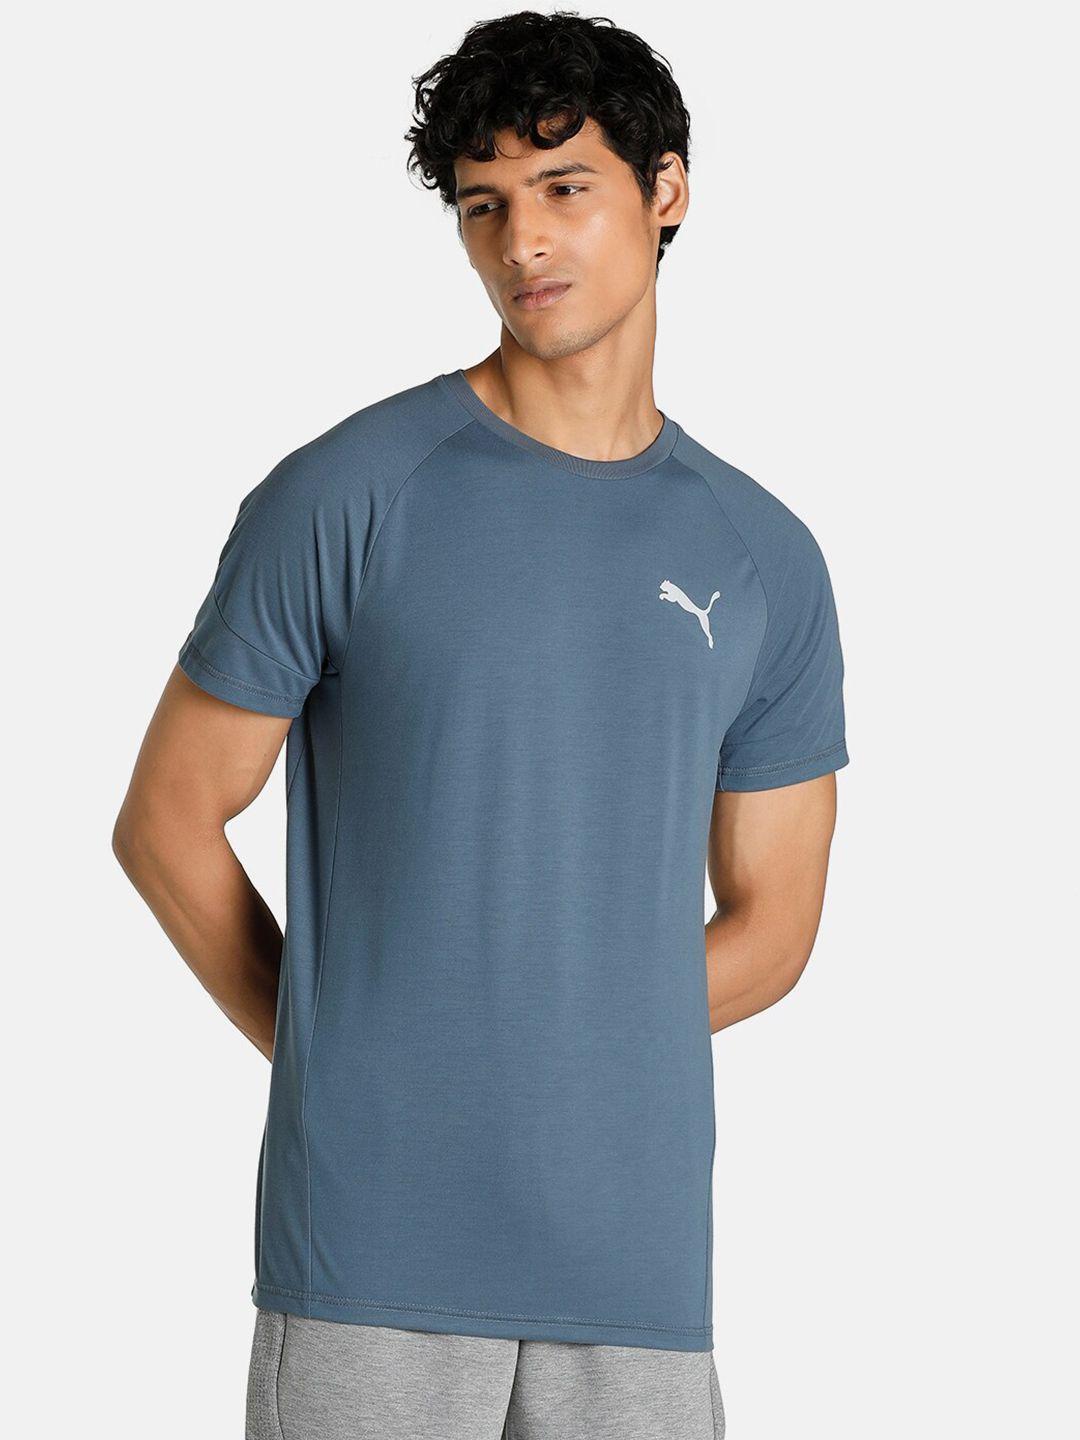 puma men grey evostripe t-shirt